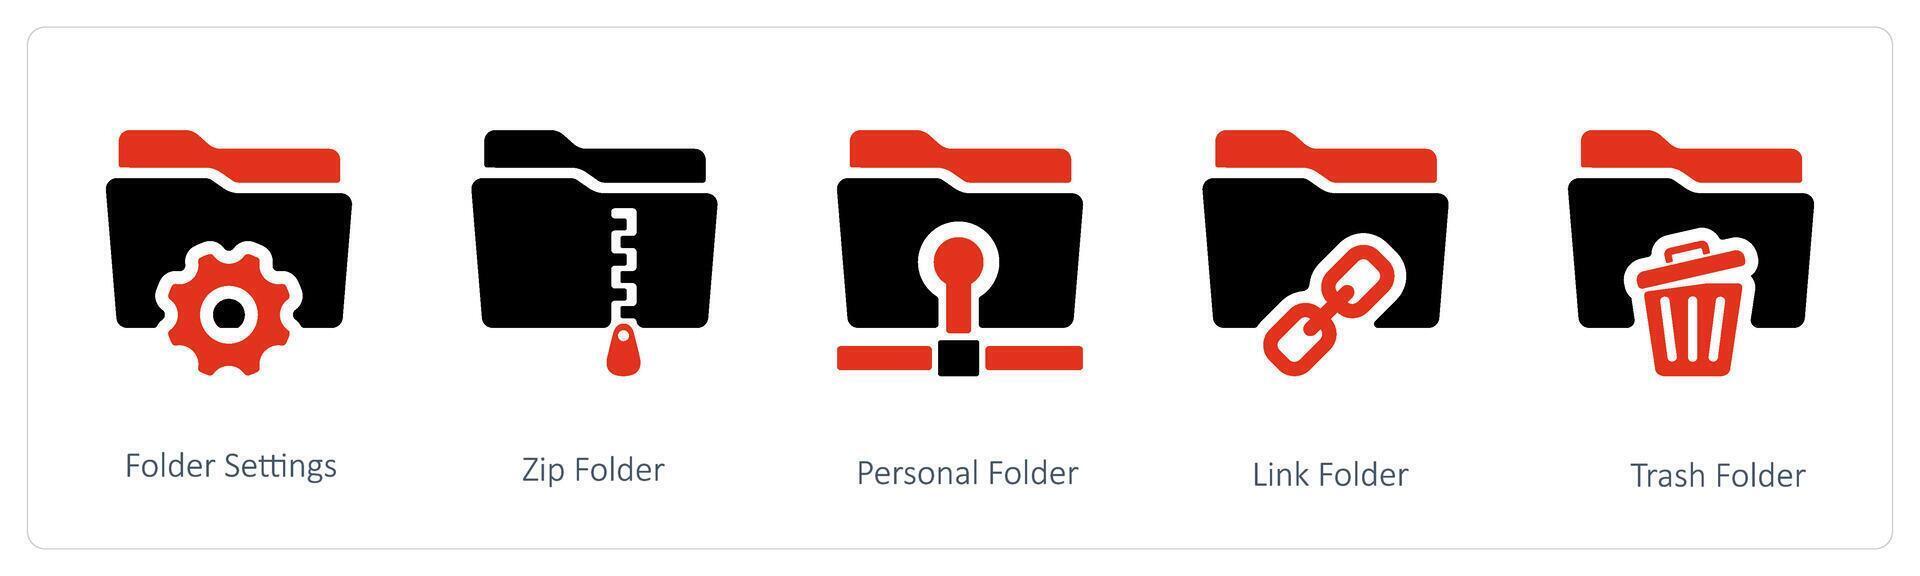 folder setting, zip and personal folder vector